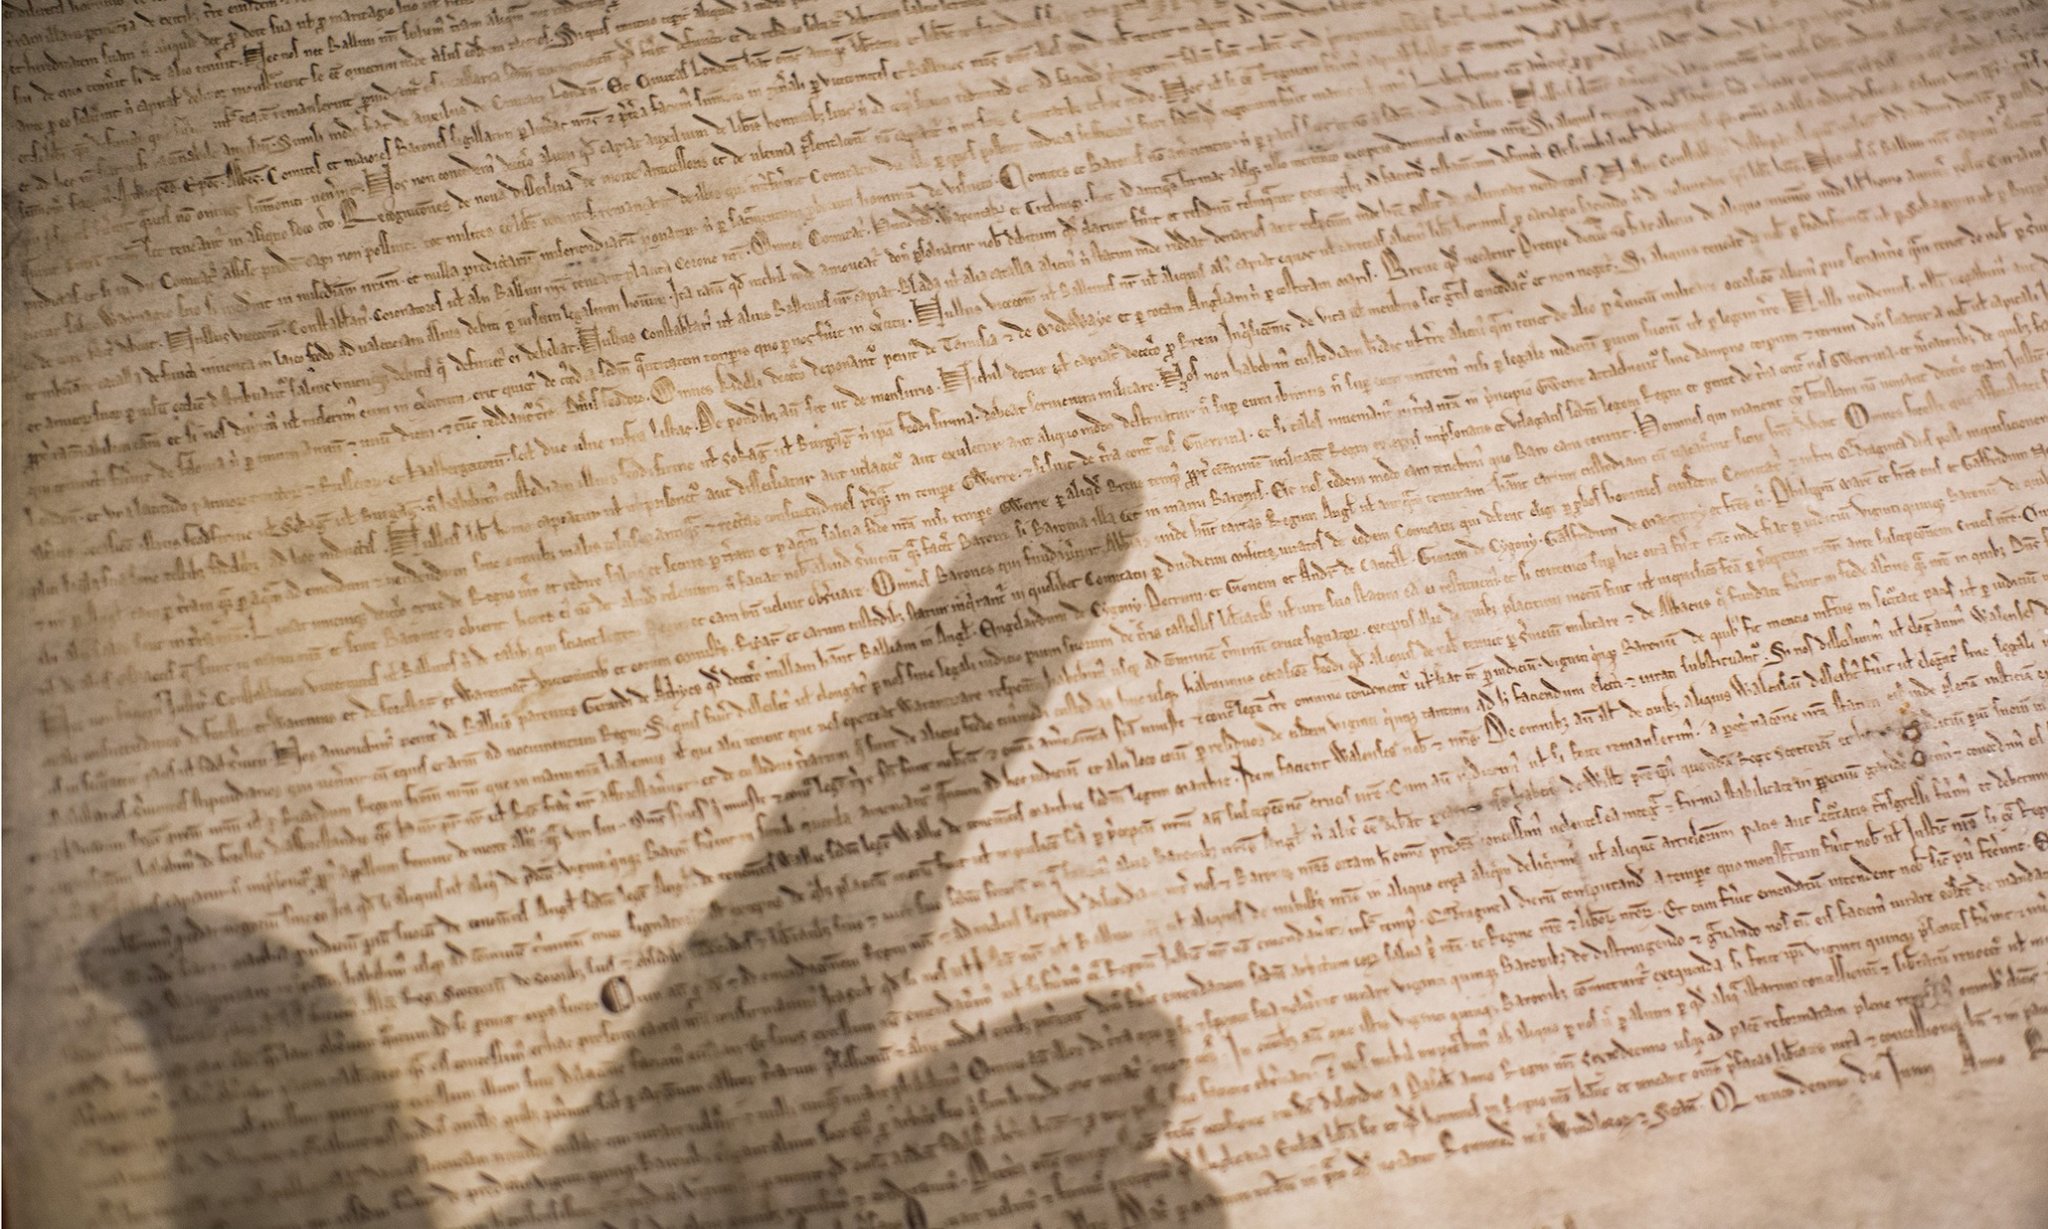 Magna Carta 800th Anniversary cover image